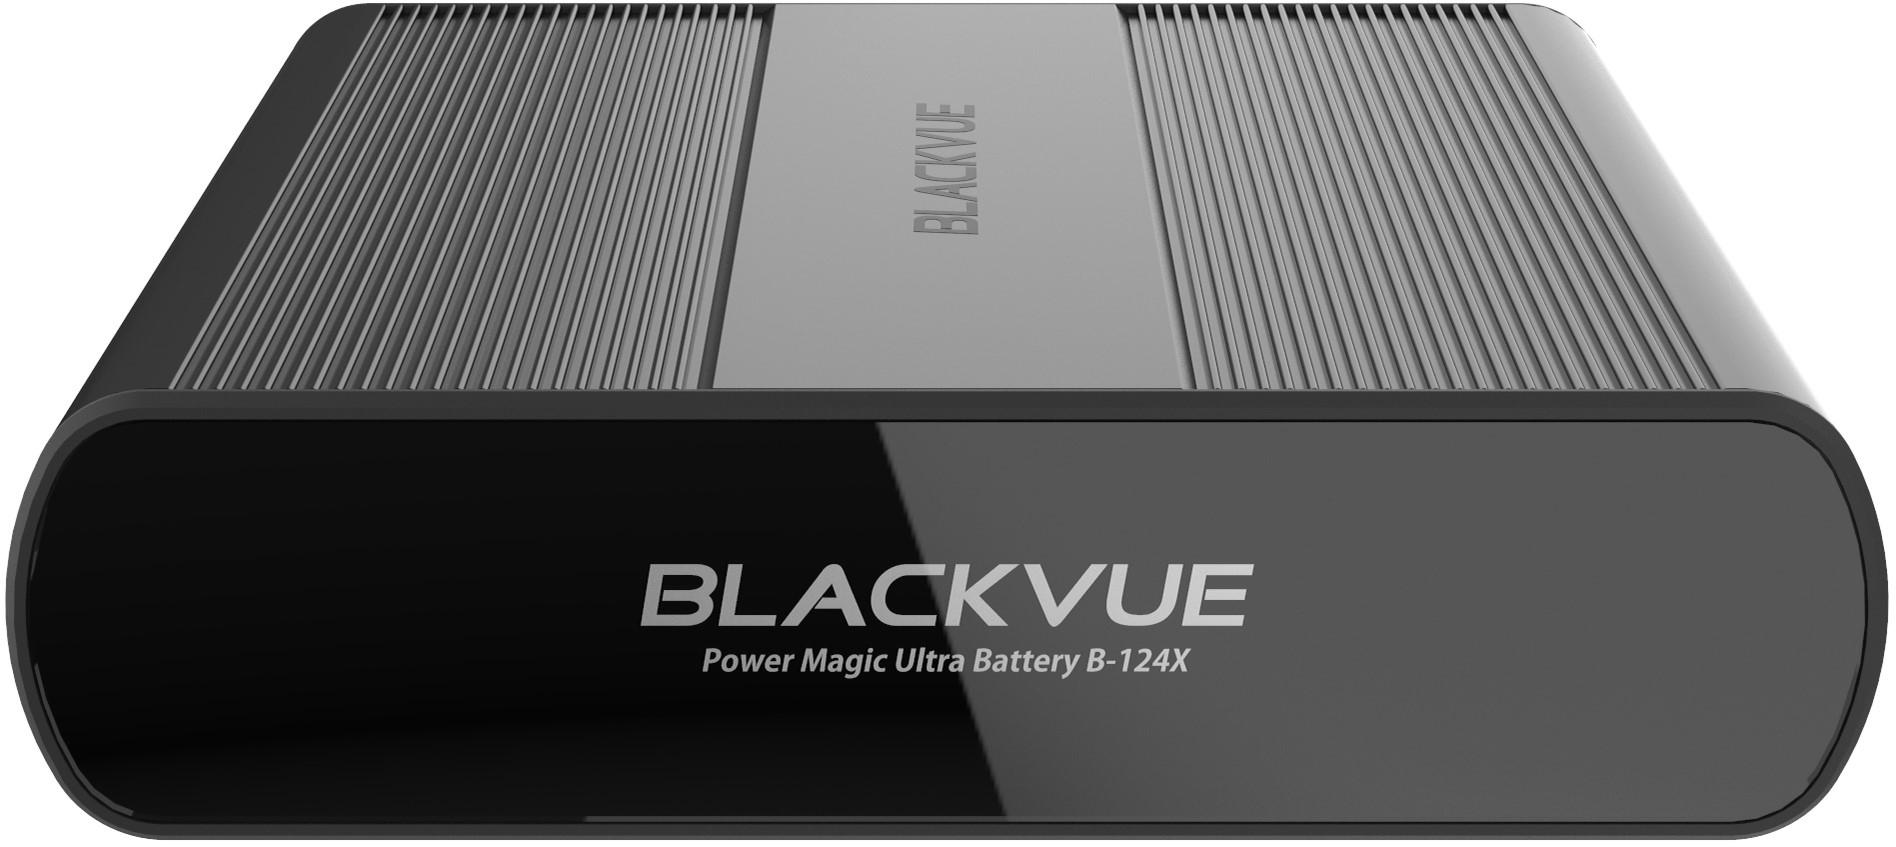 Blackvue Power Magic Battery B-124X